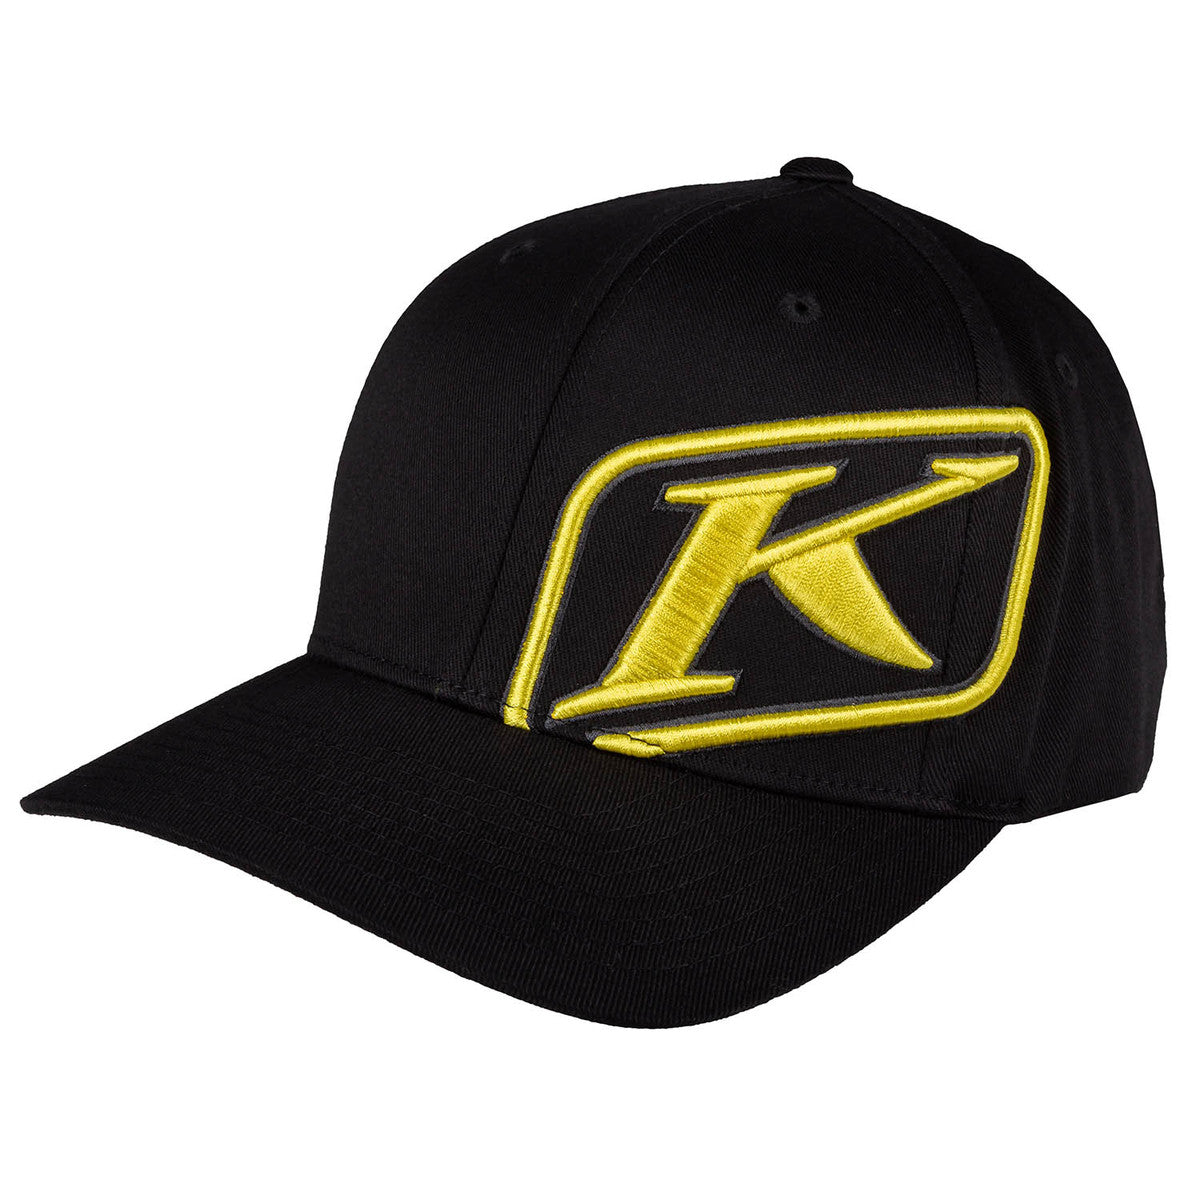 Klim Rider Black-Yellow Hat